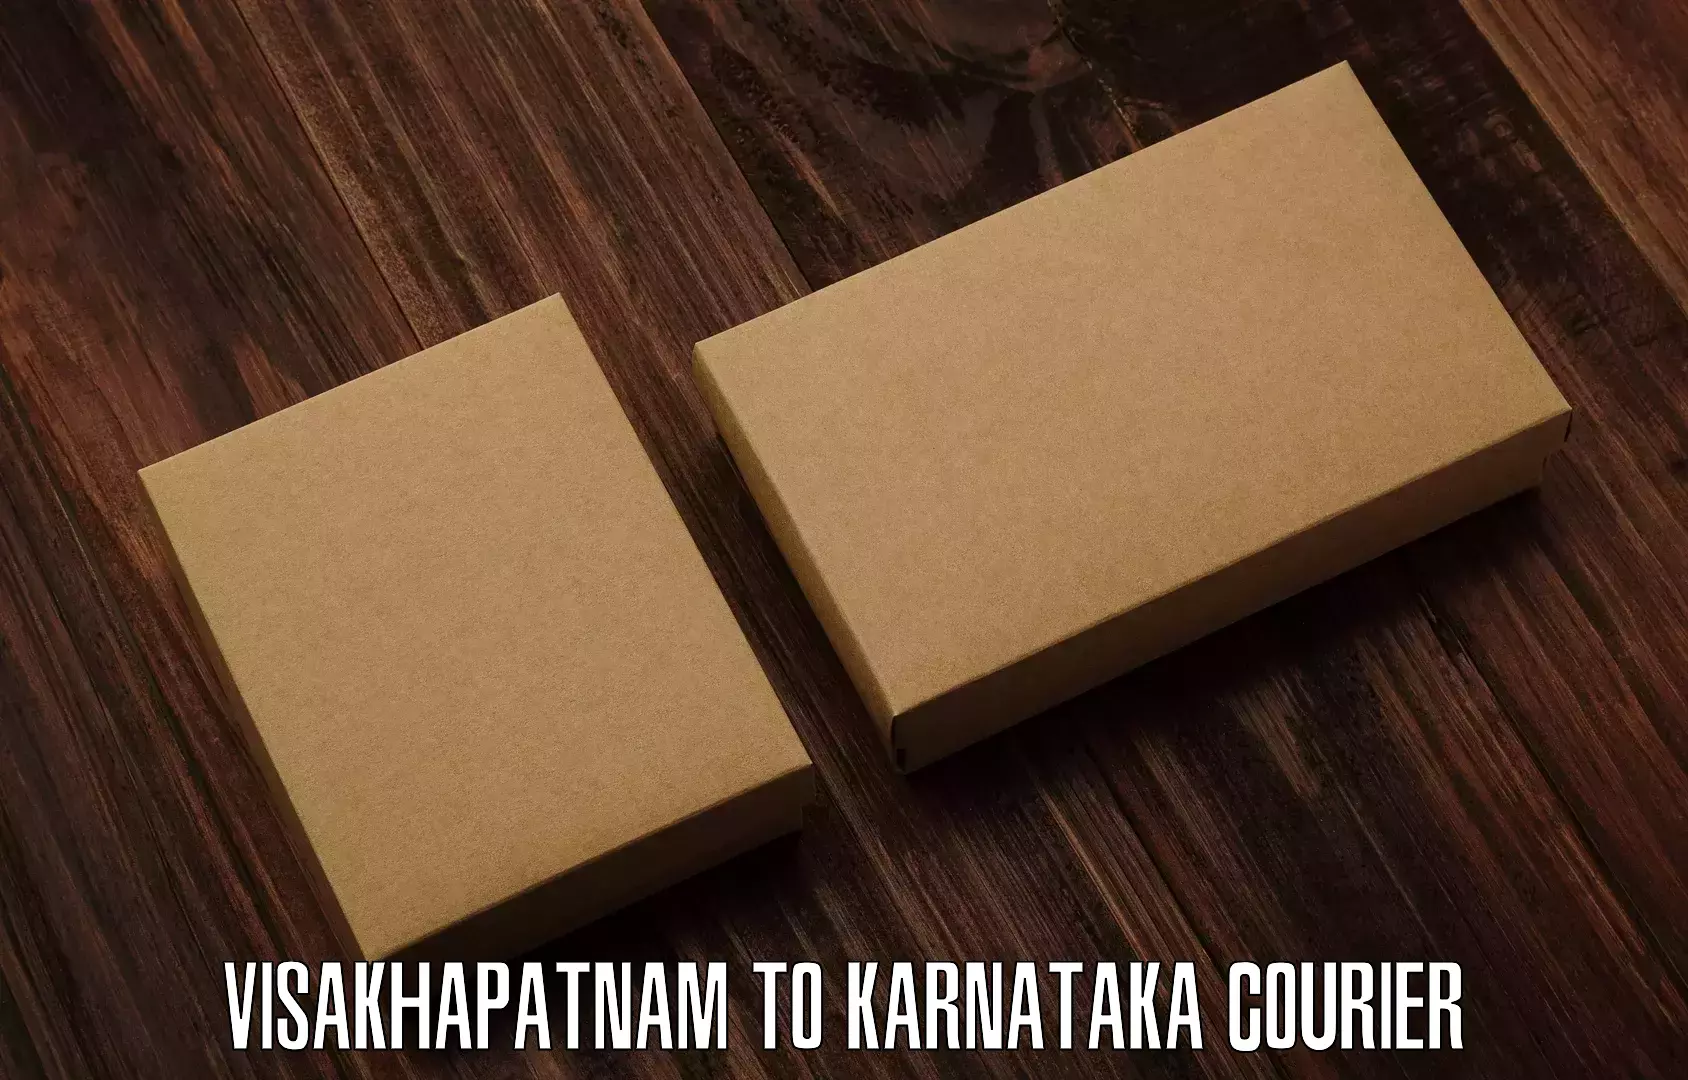 Courier service partnerships Visakhapatnam to Karnataka